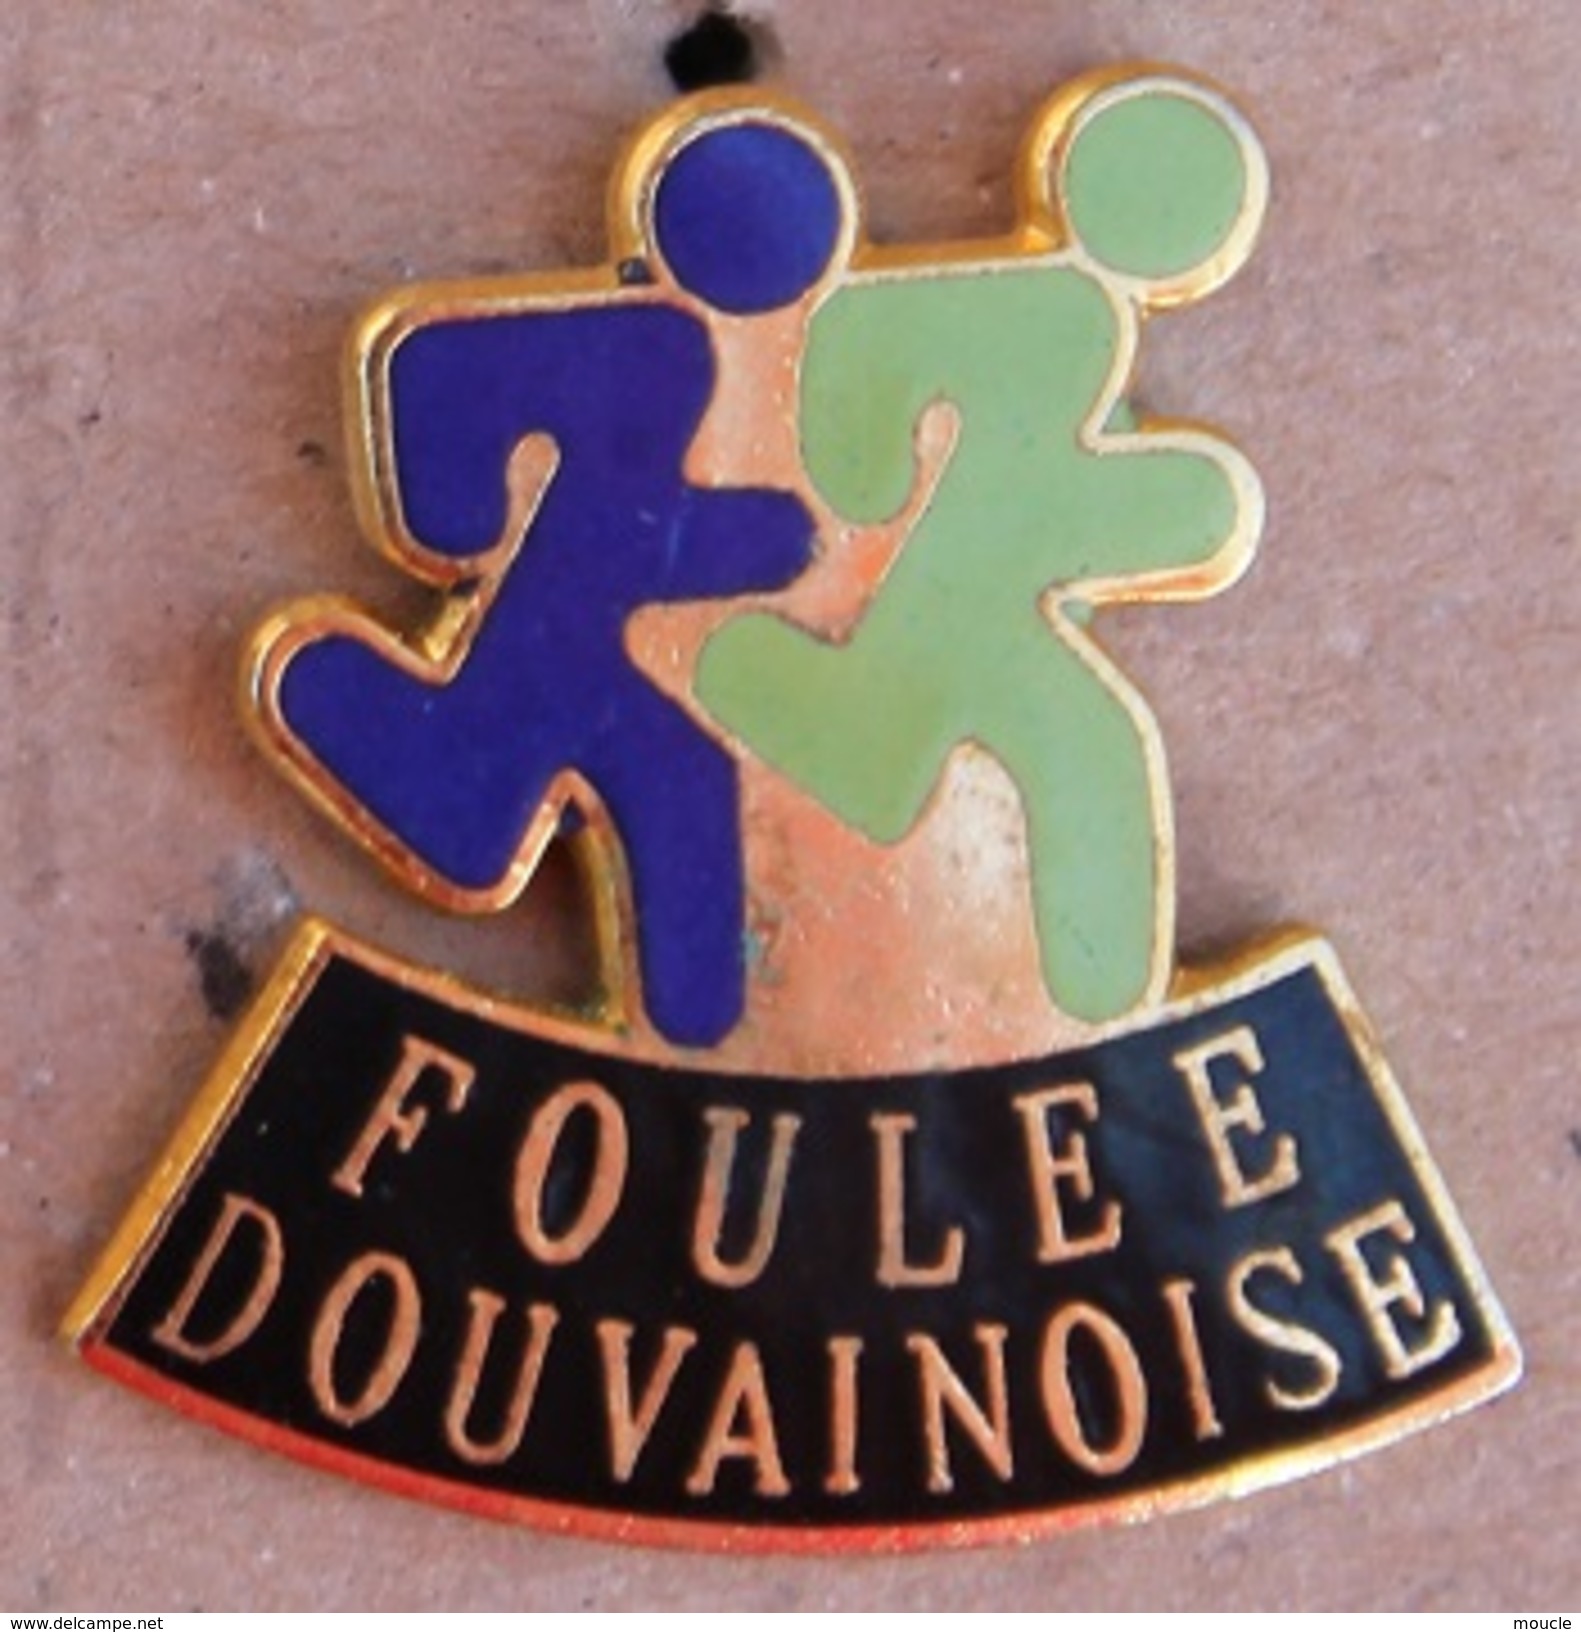 FOULEE DOUVAINOISE - DOUVAINE - COUREURS -    (17) - Leichtathletik